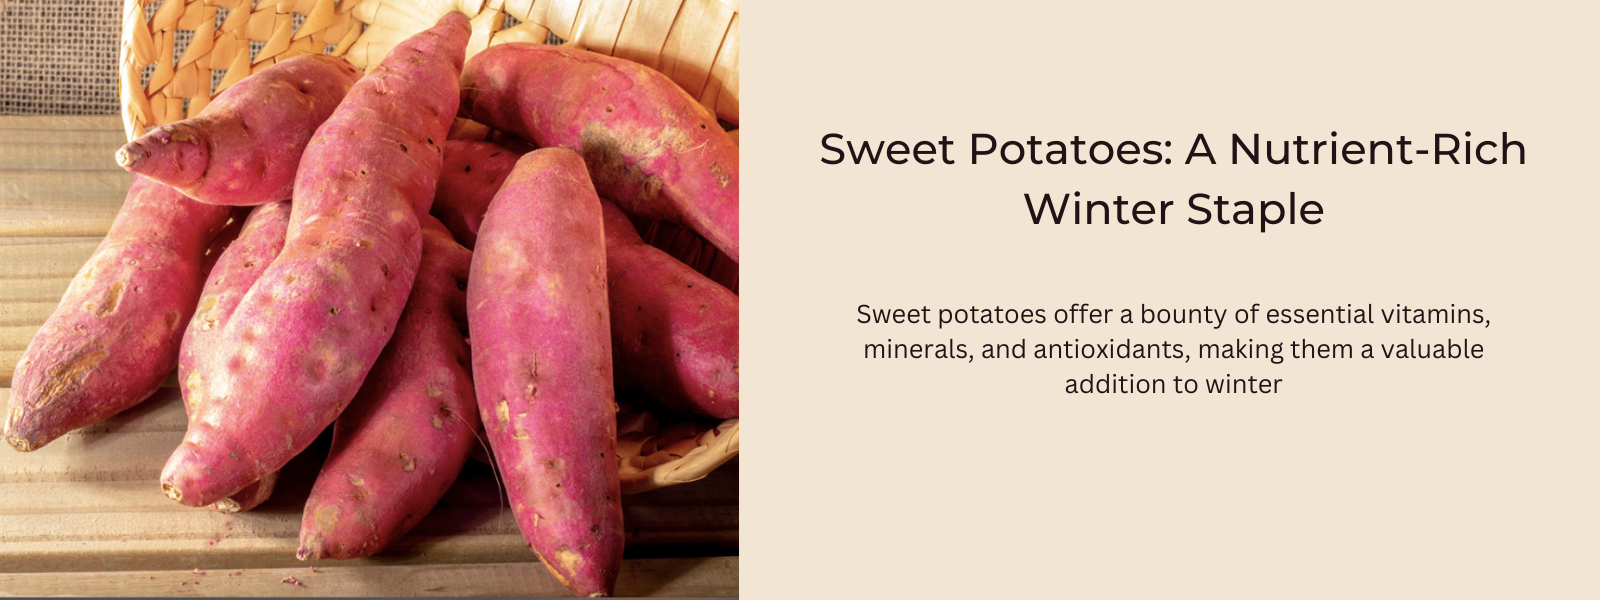 Sweet Potatoes: A Nutrient-Rich Winter Staple